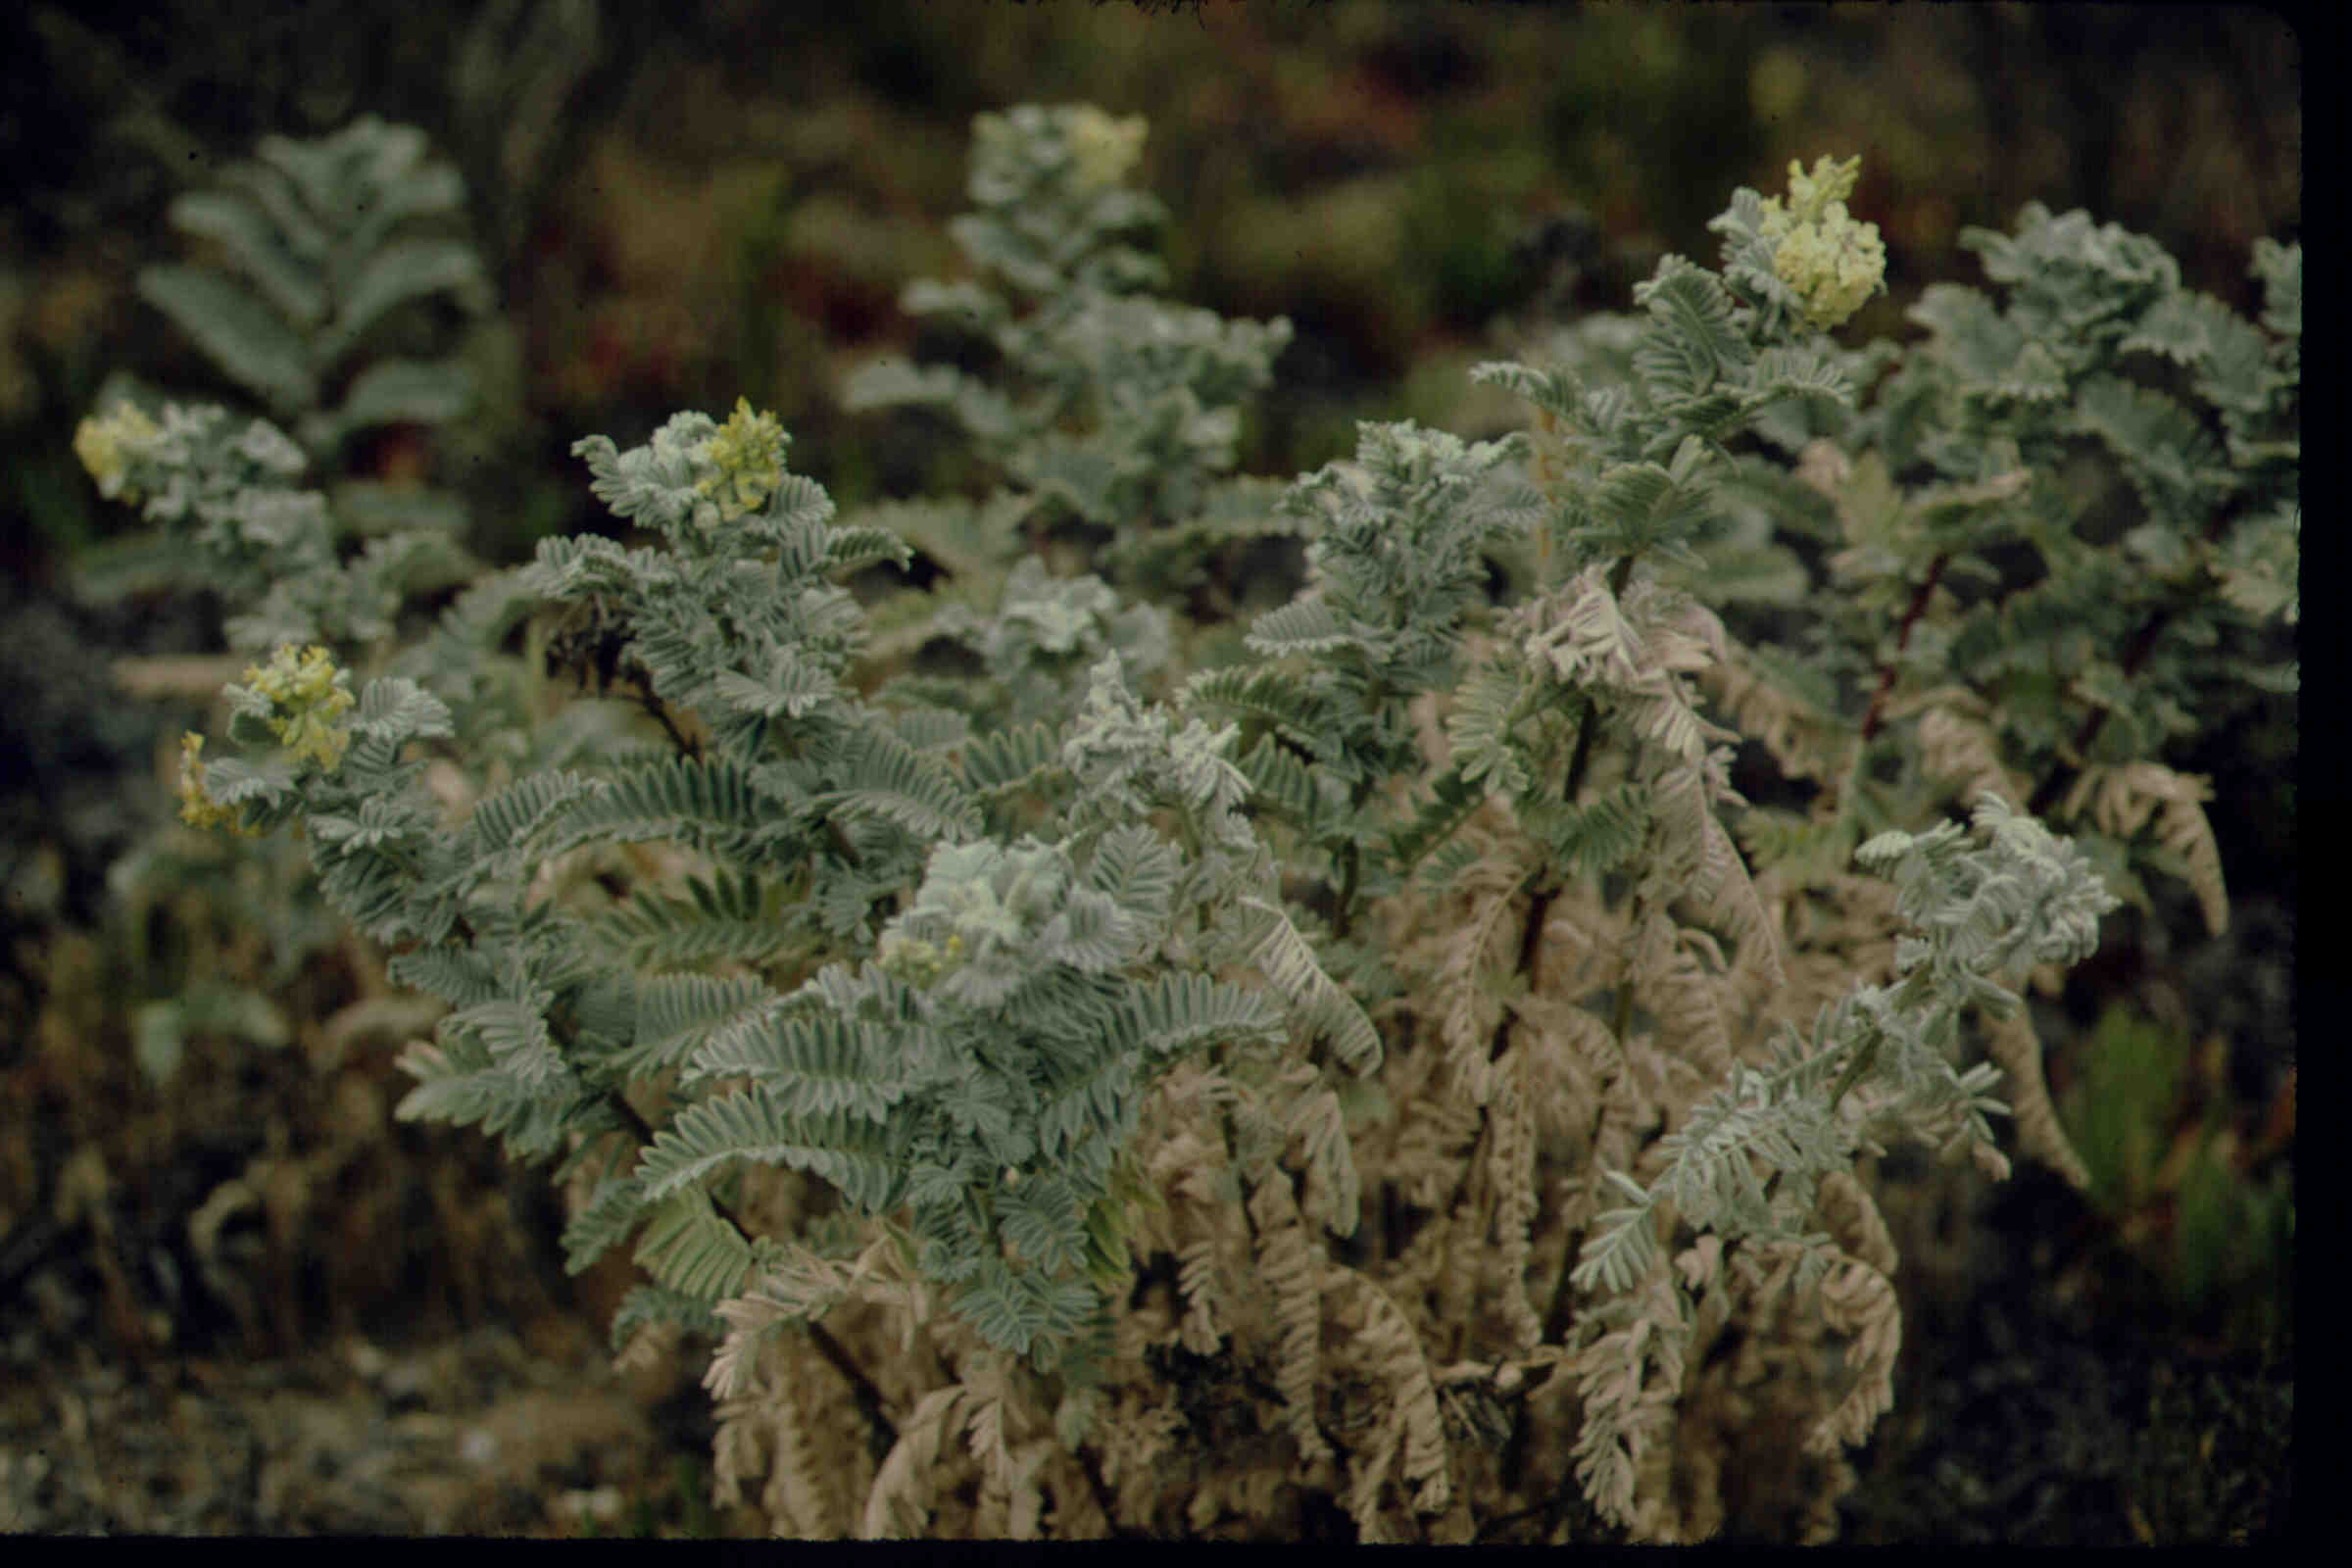 Astragalus pycnostachyus var. lanosissimus - by Rick Burgess